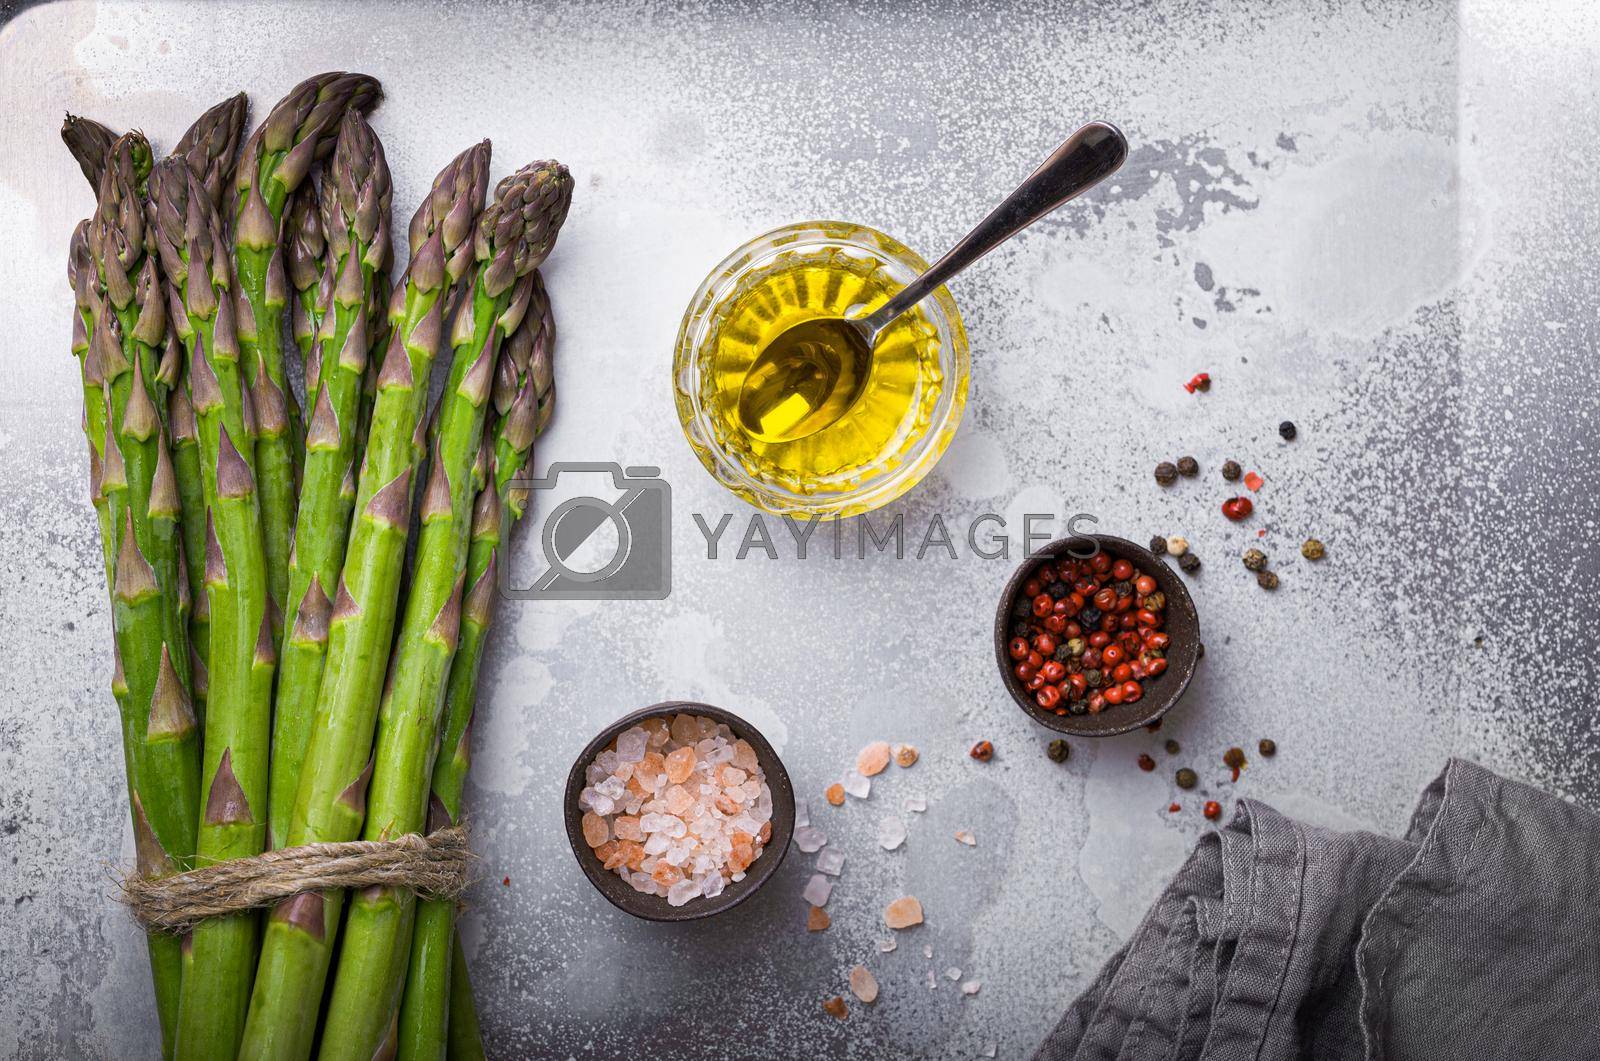 Royalty free image of Fresh green organic asparagus bunch by its_al_dente